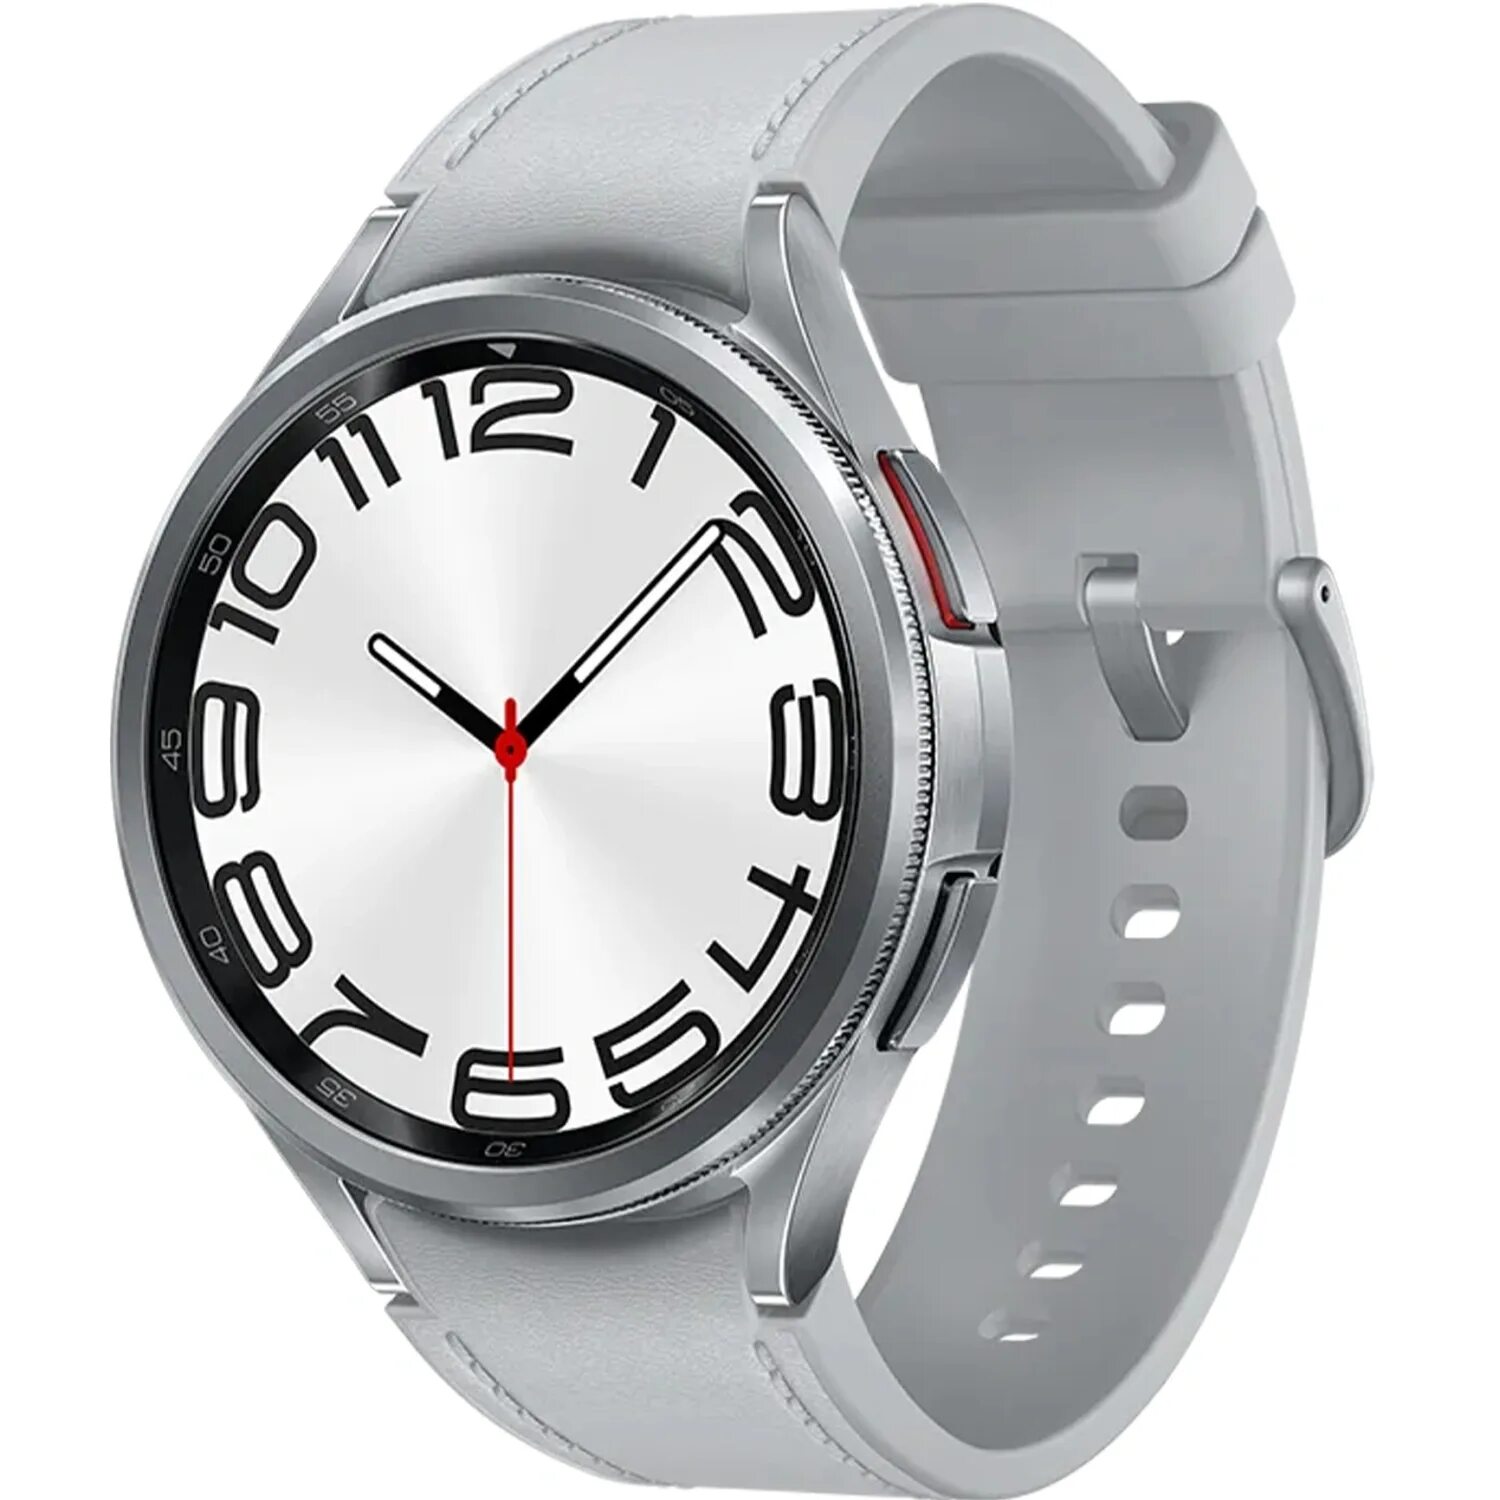 Watch6 classic 47 мм. Galaxy watch 6 Classic BT r960 47mm Silver. Galaxy watch 6 Classic. Galaxy watch 6 Classic 47.